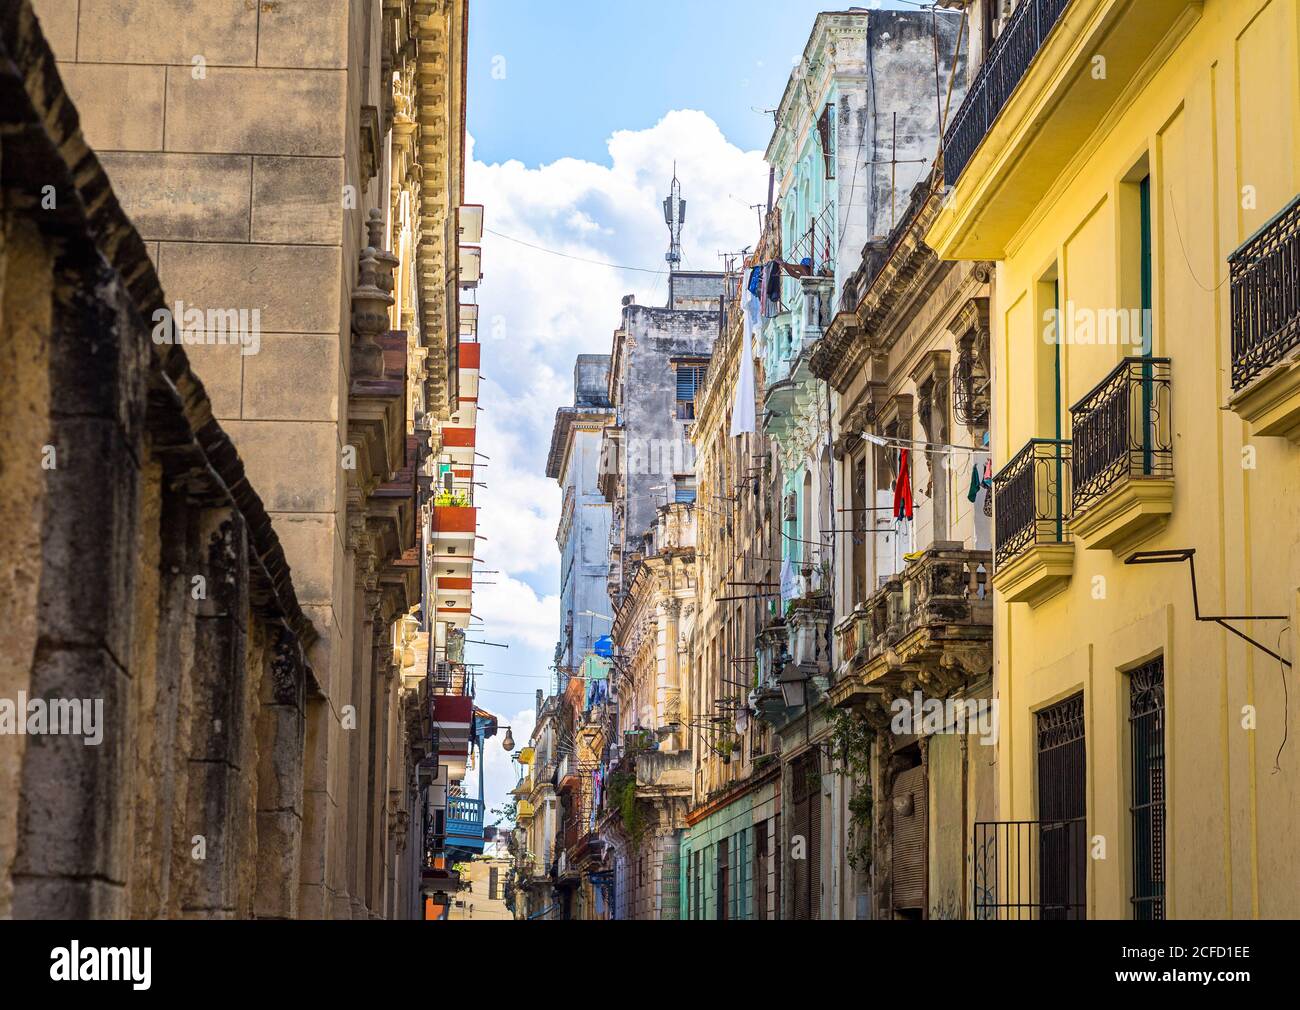 Bunte kubanische Gasse mit alten kolonialen Hausfassaden, Alt-Havanna, Kuba Stockfoto